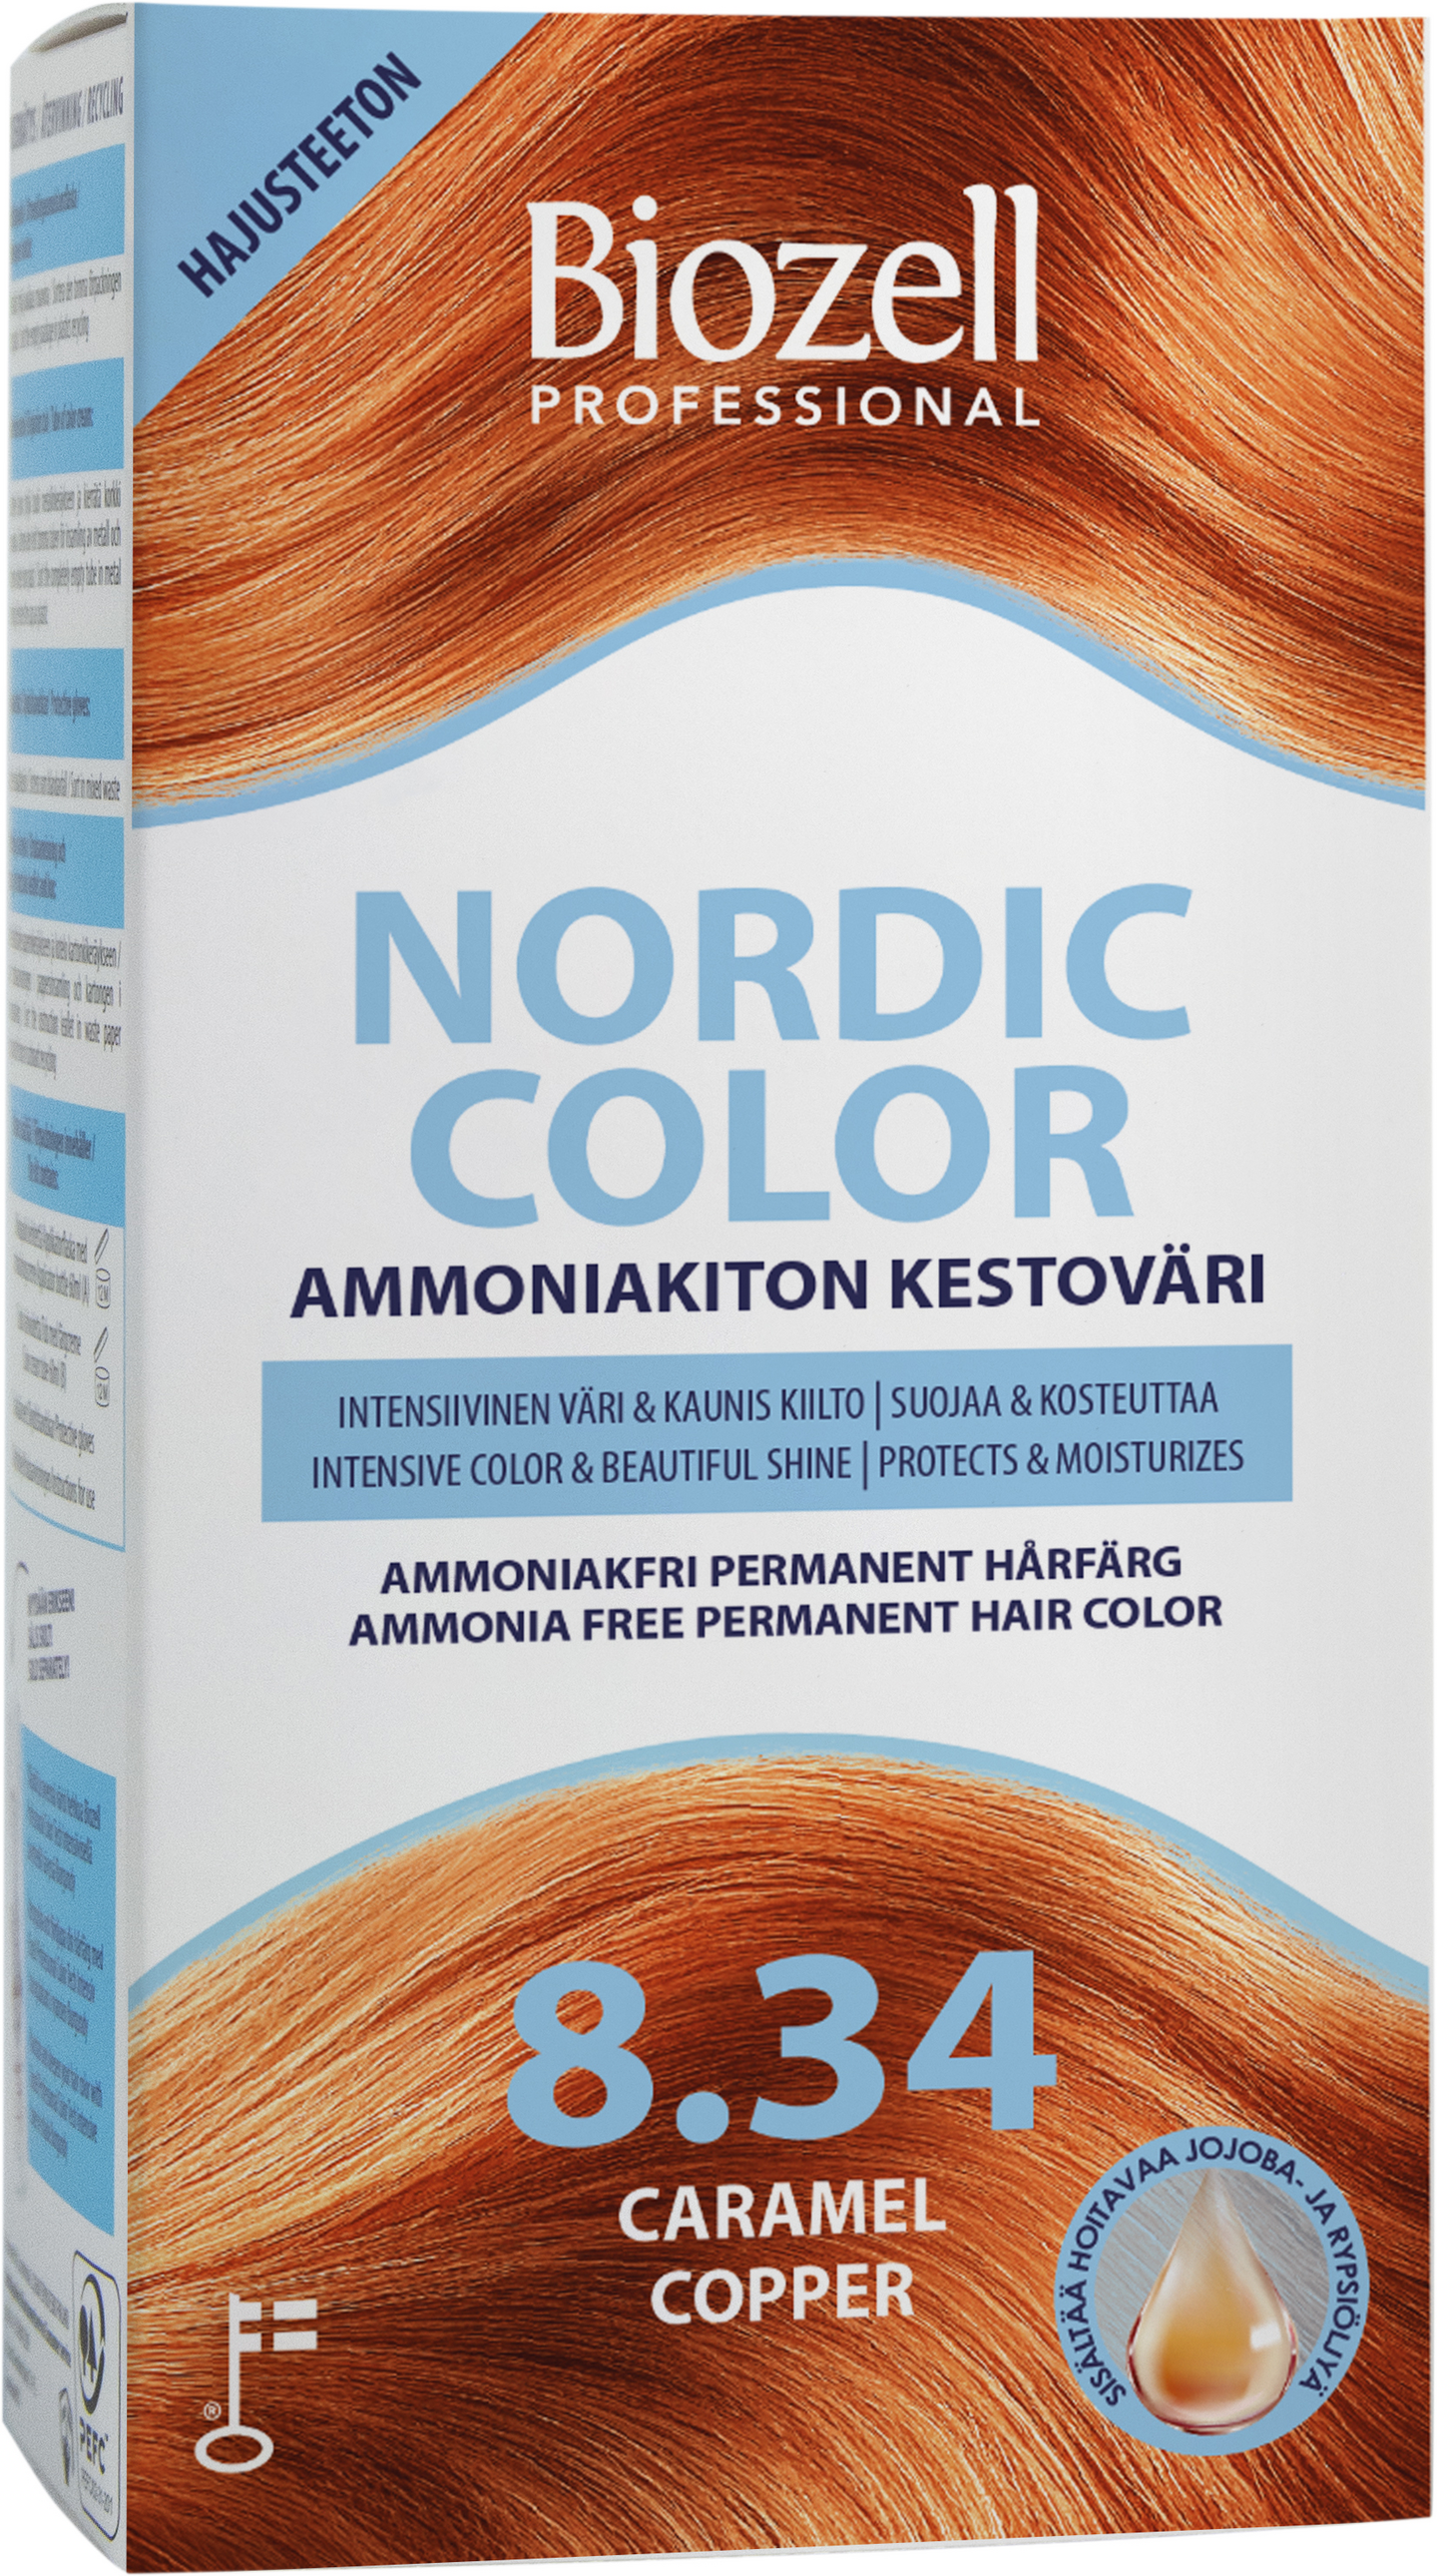 Biozell Professional Nordic Color kestoväri 8.34 2x60ml Caramel Copper ammoniakiton